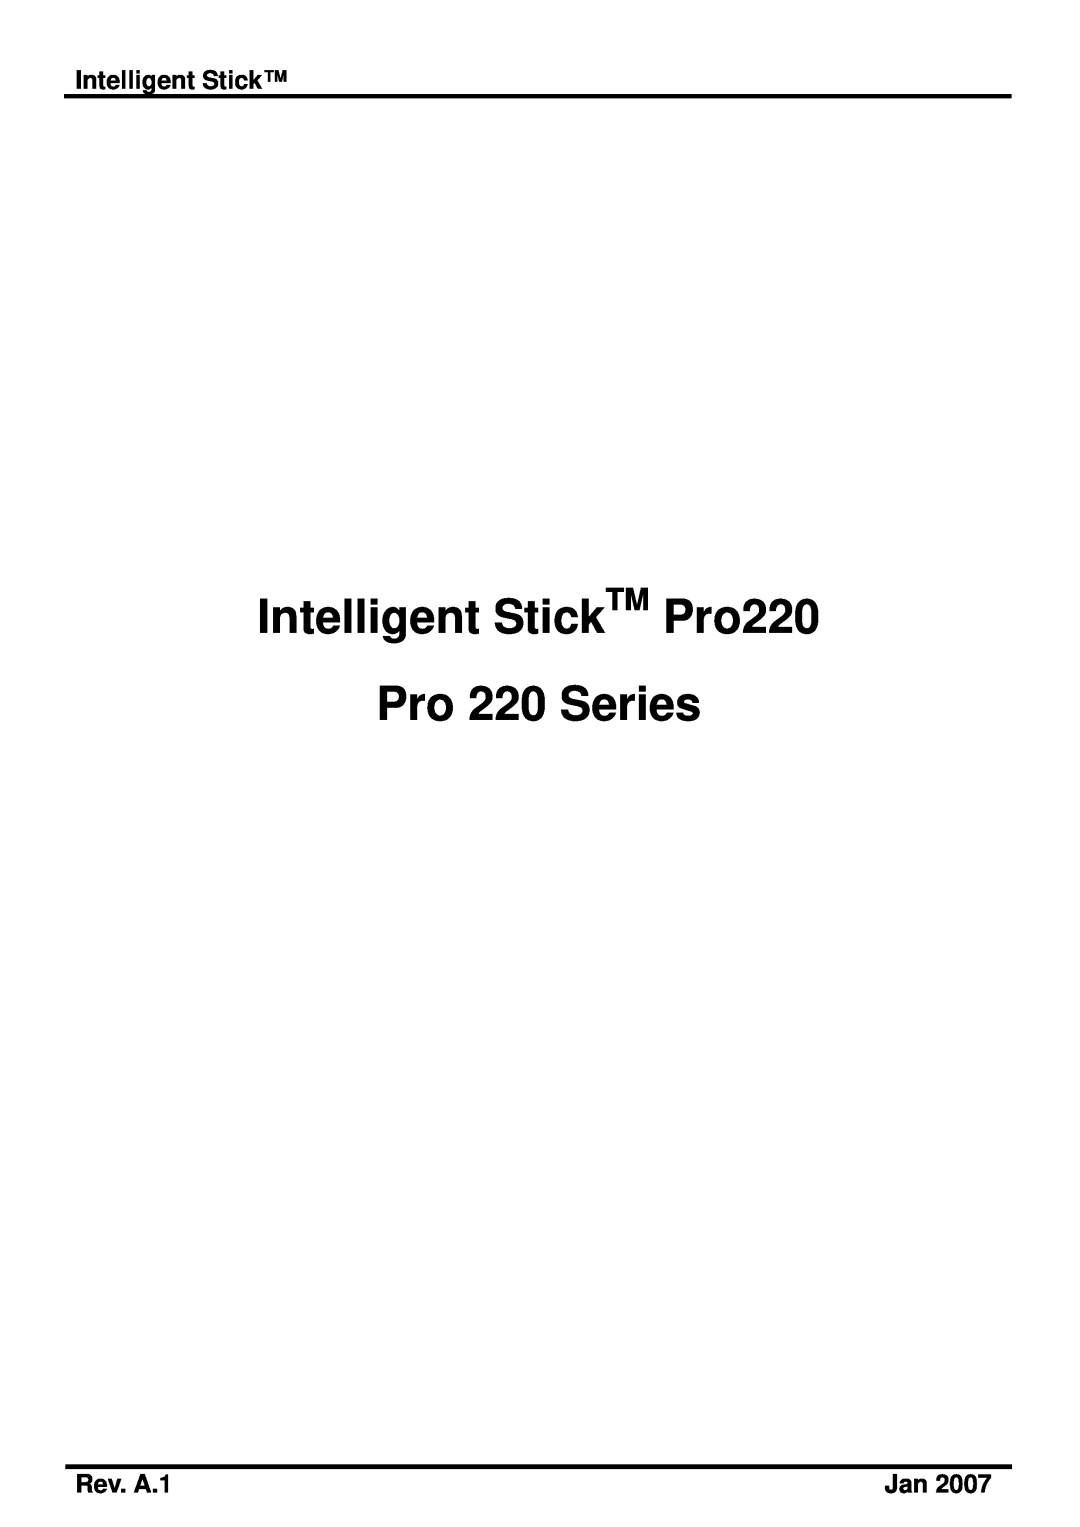 PQI manual Rev. A.1, Intelligent StickTM Pro220 Pro 220 Series 